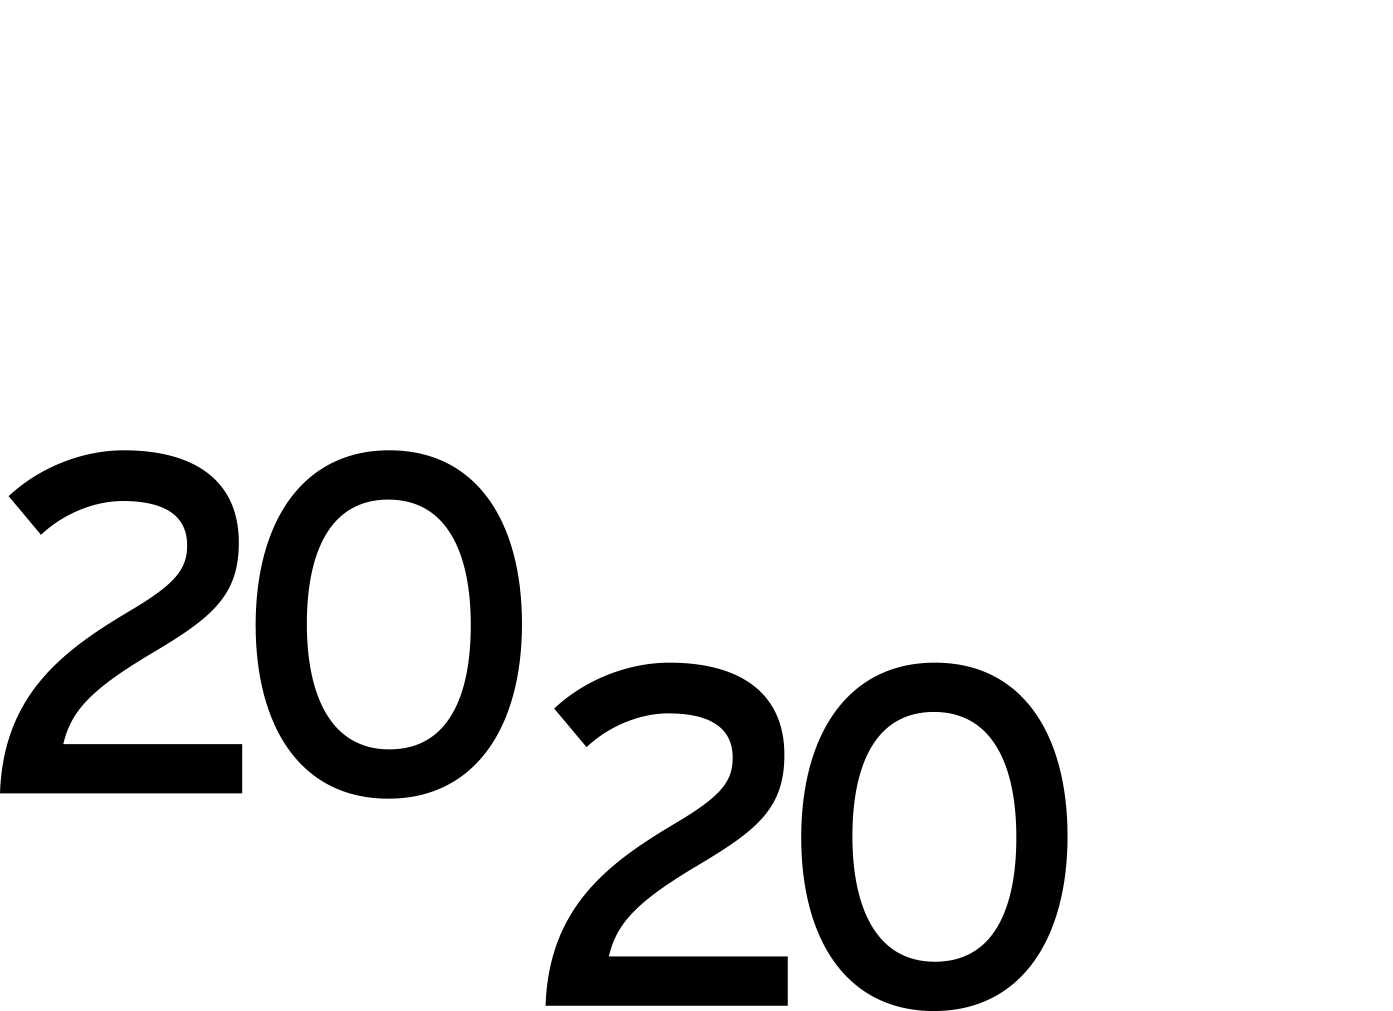 Design dla konesera